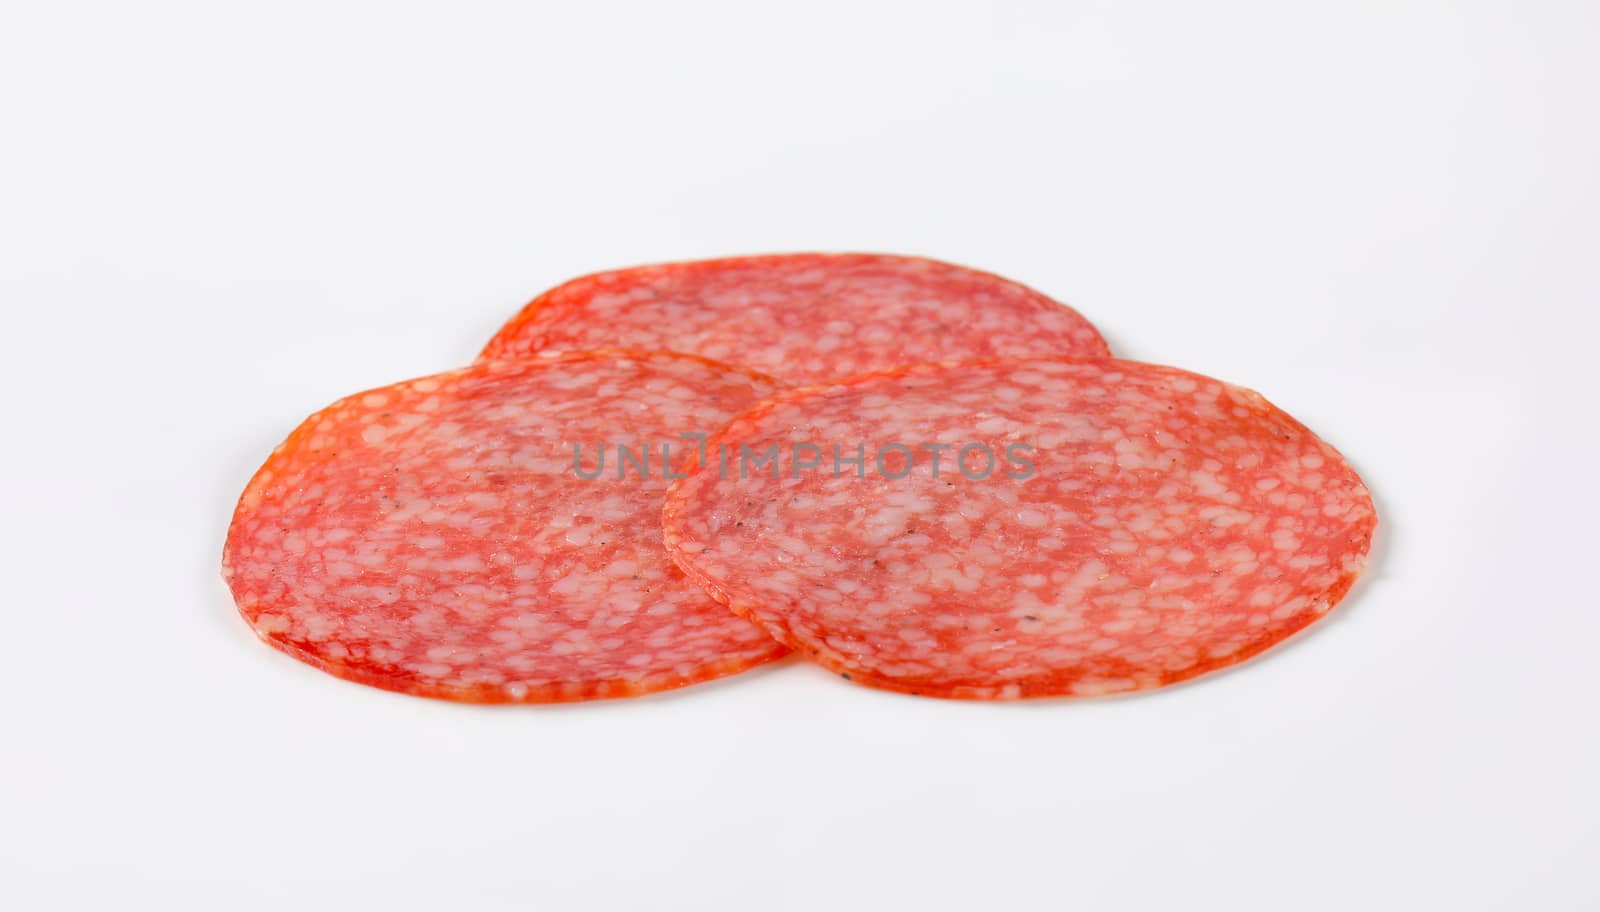 Thin slices of Hungarian salami